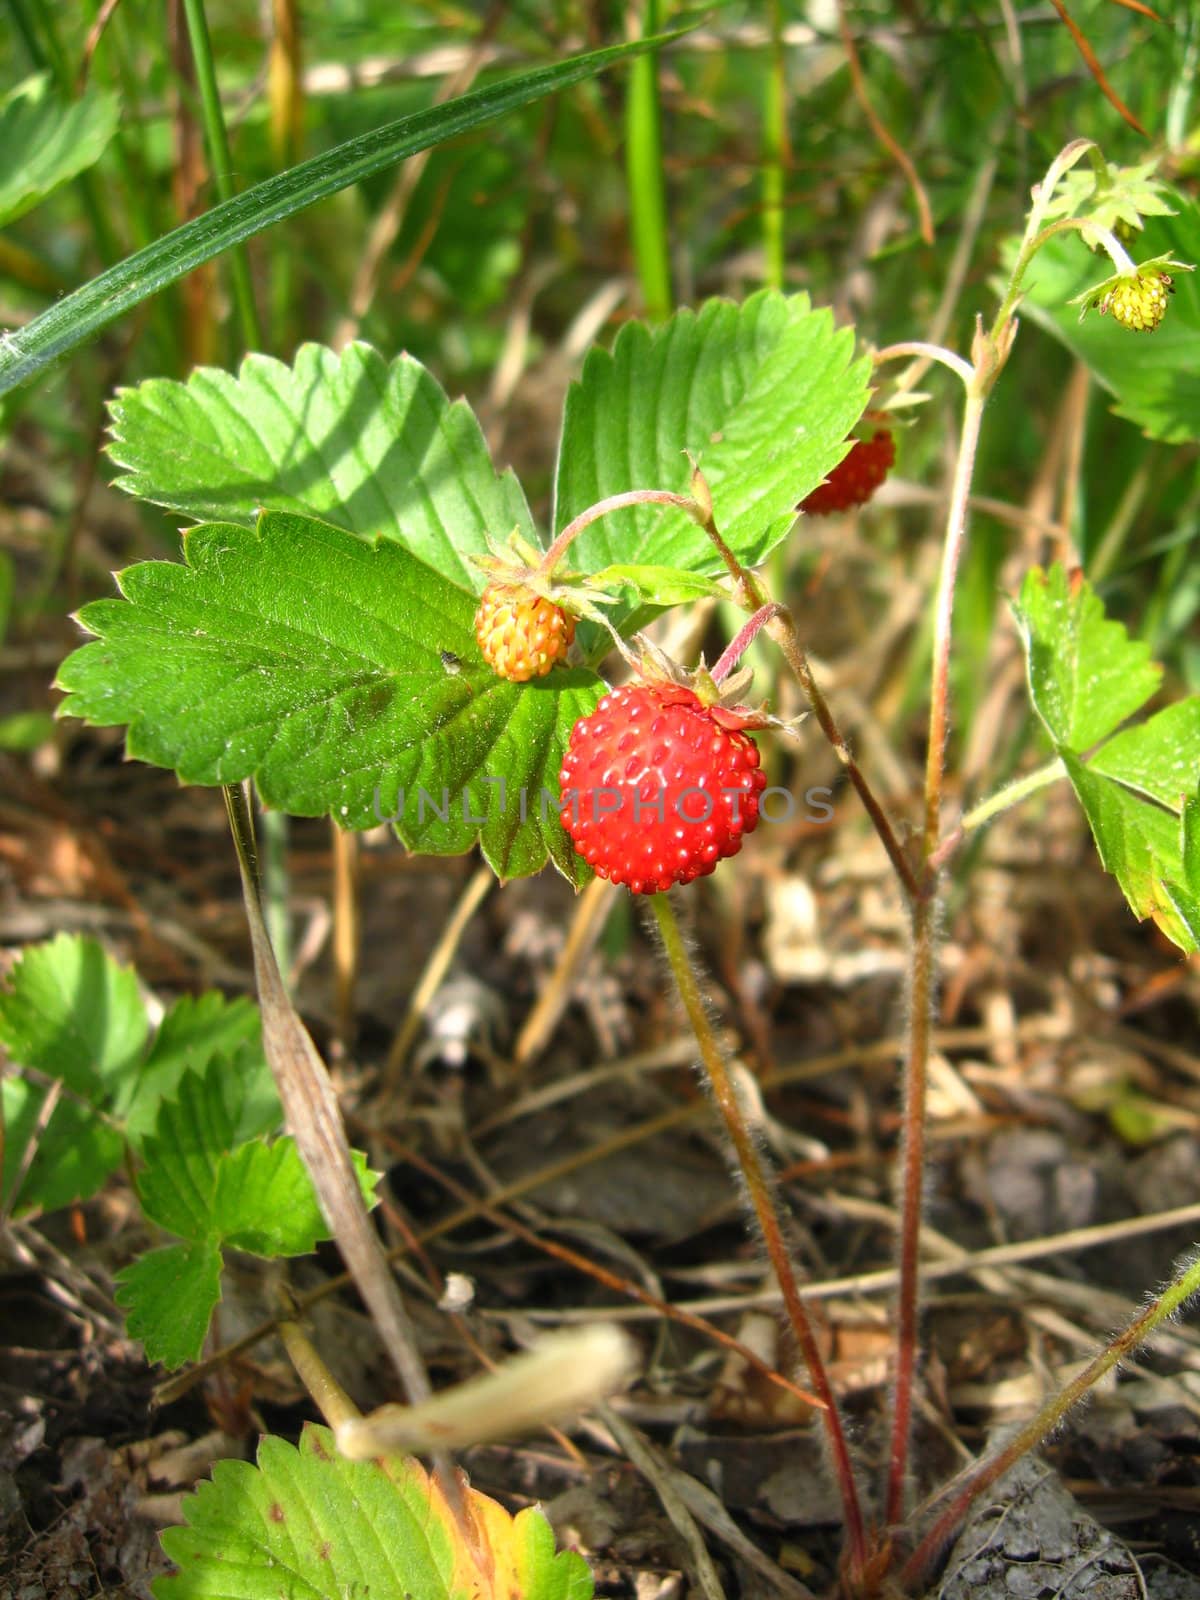 Beautiful wild strawberry found in a wood by alexmak